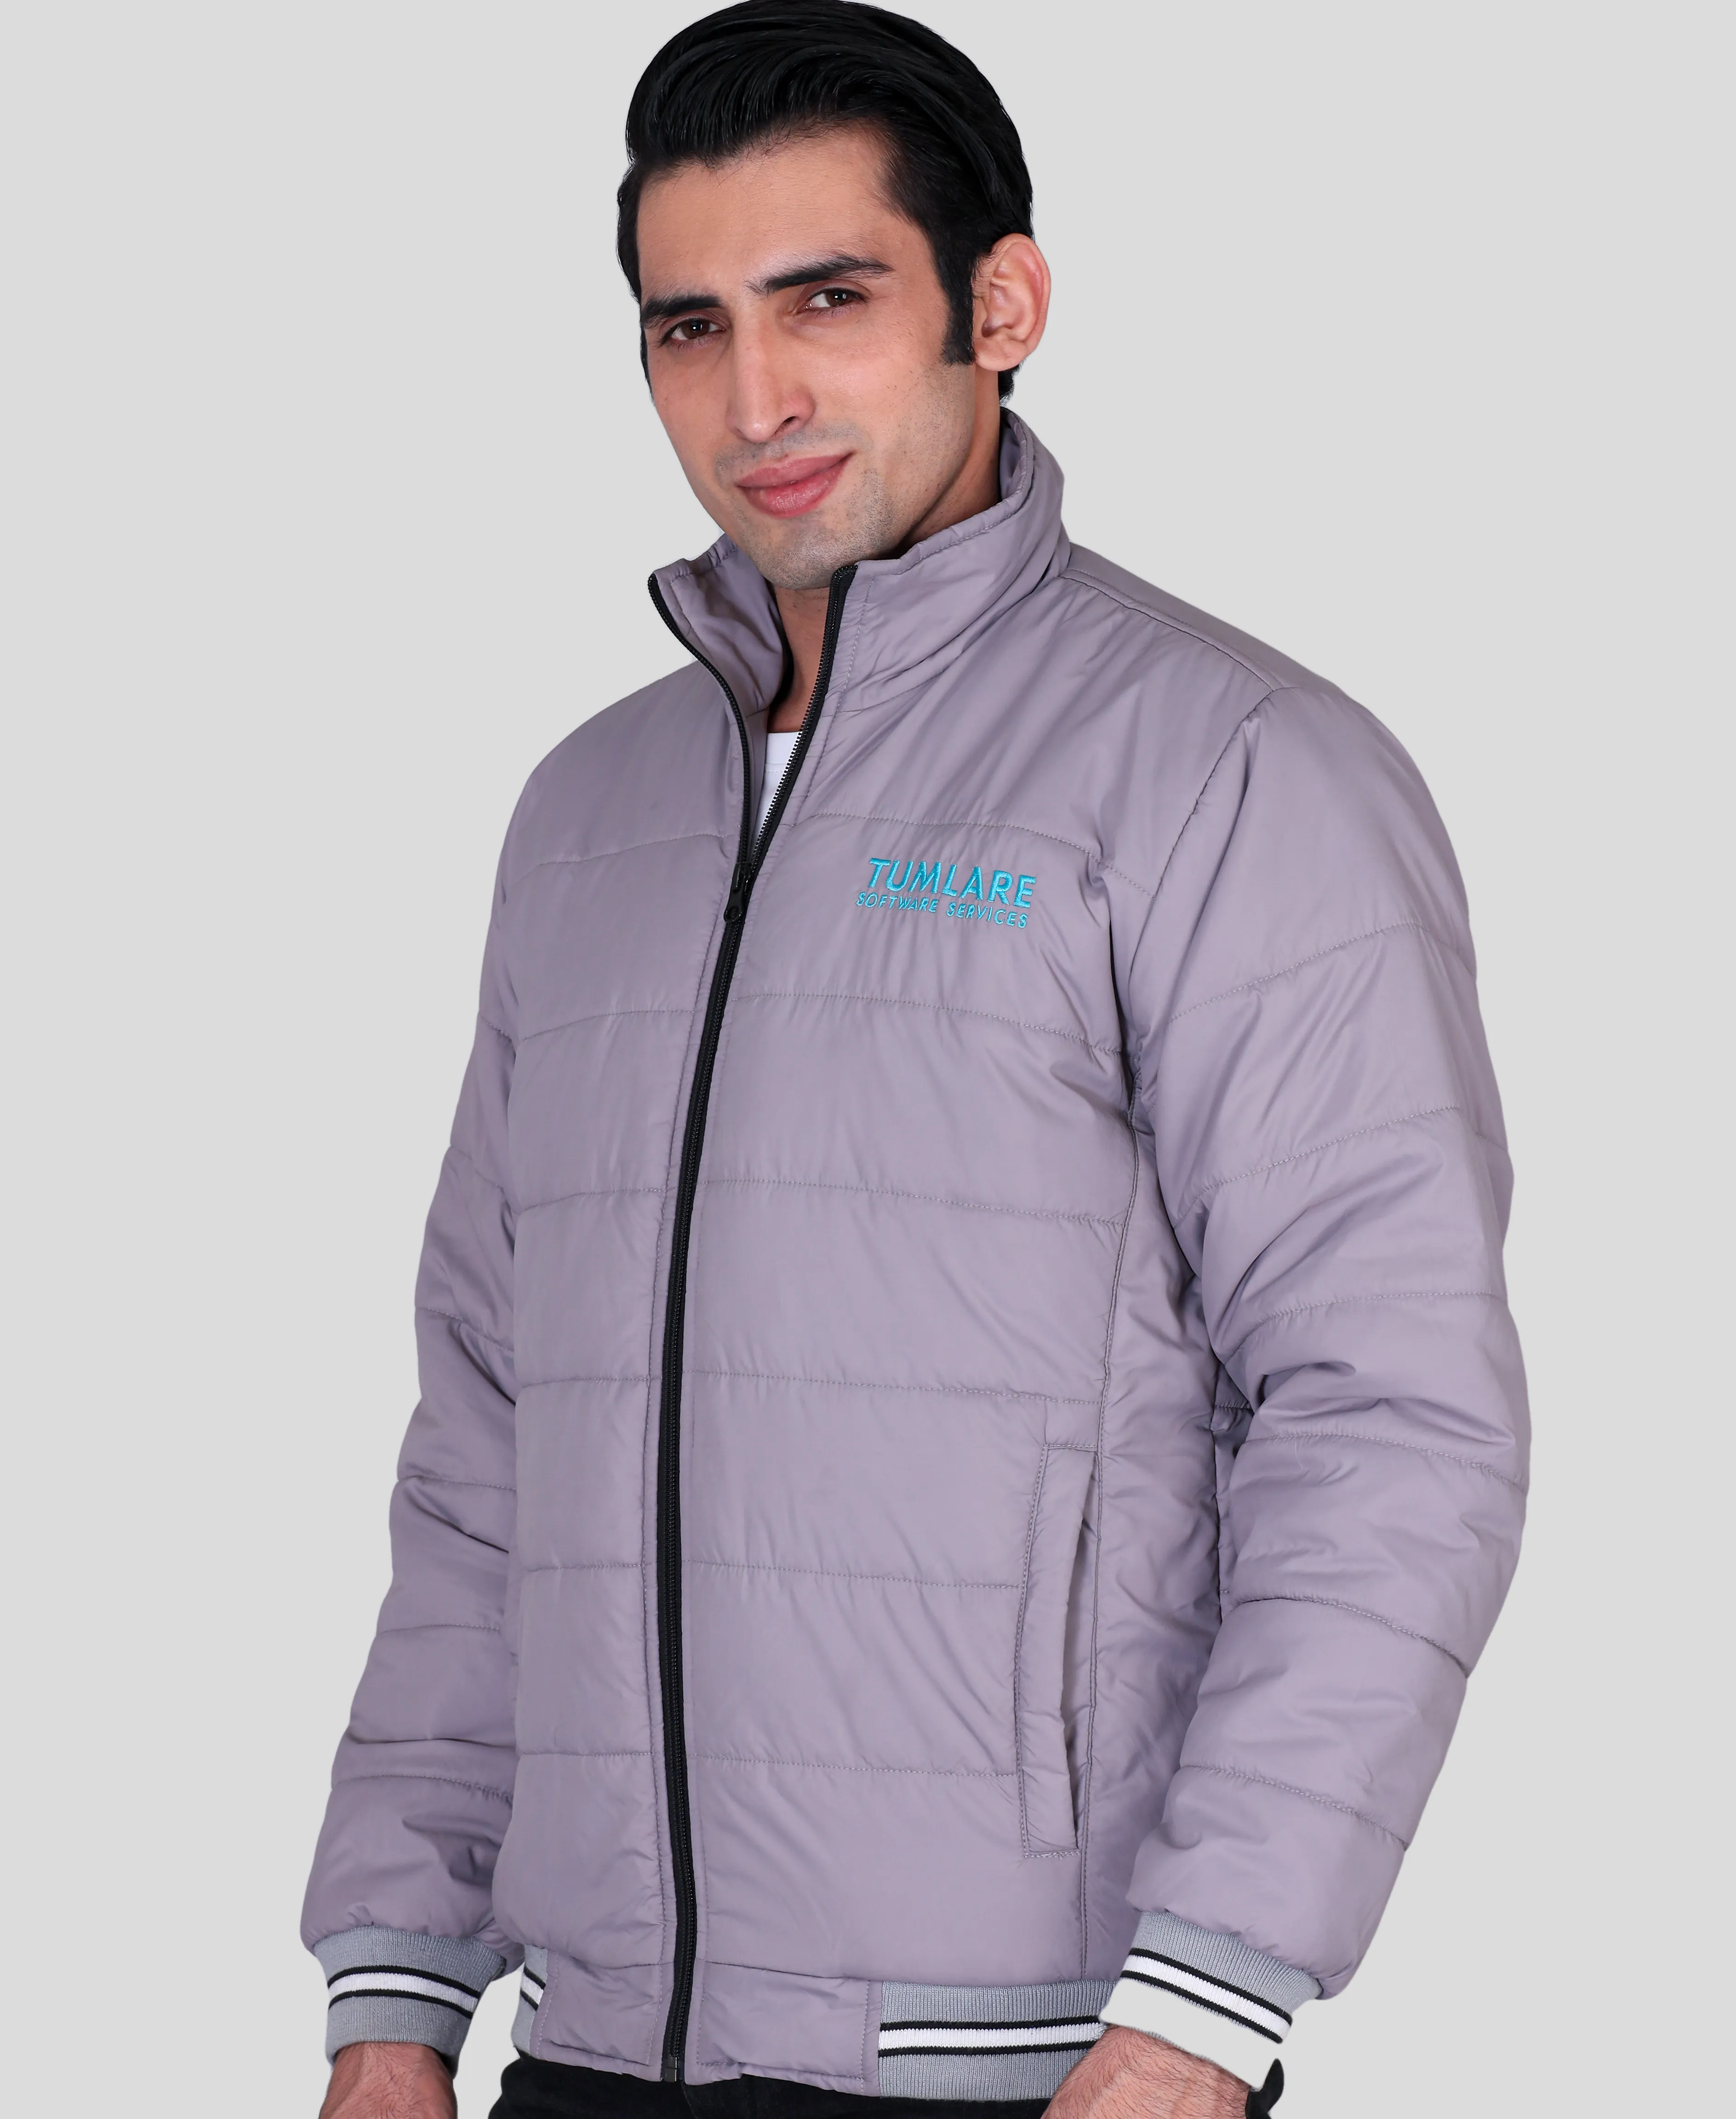 Manufacturer of embroidered custom jackets